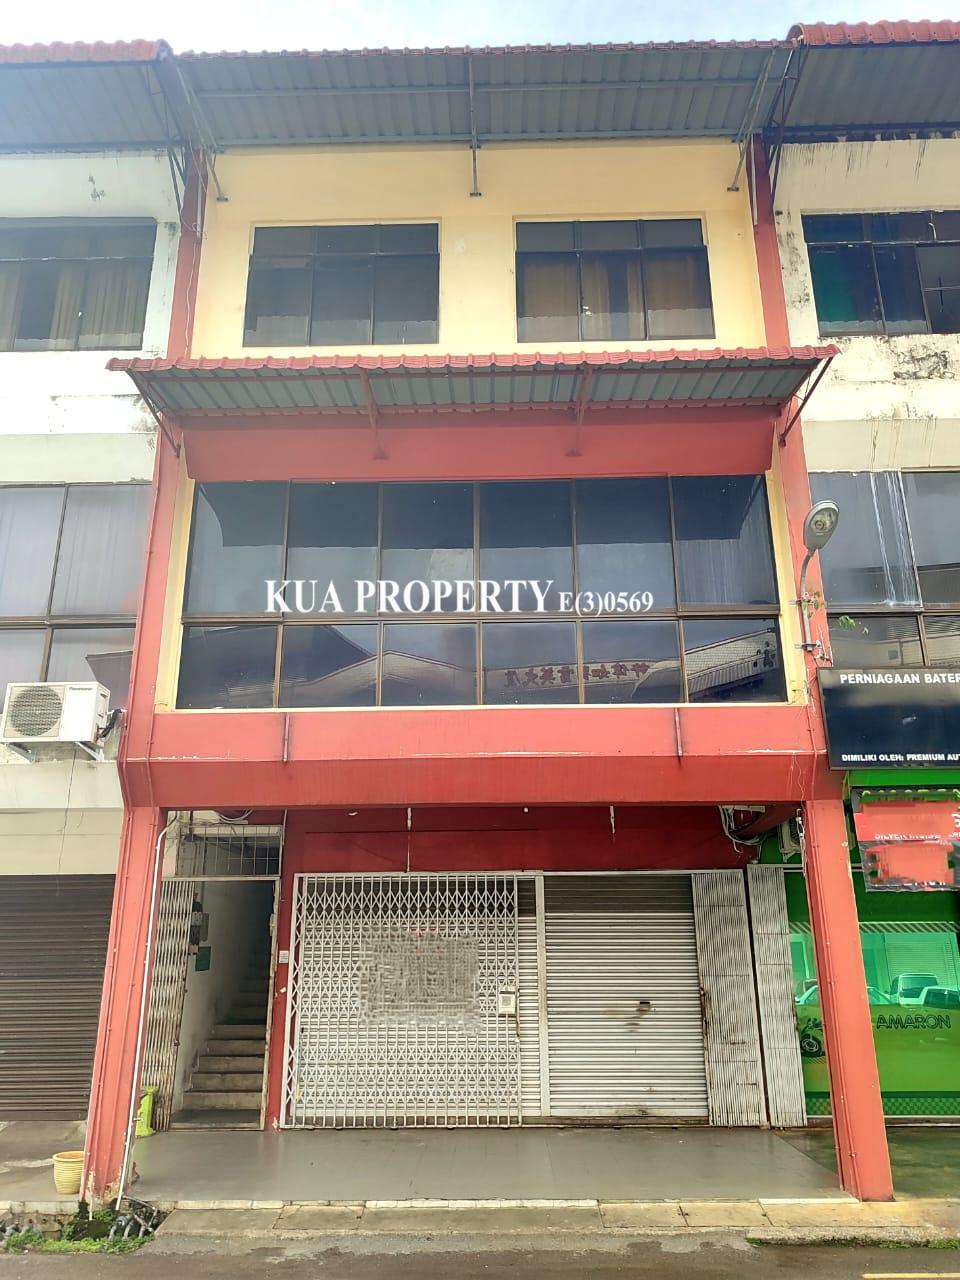 intermediate 3 Storey Shop house For Sale! Location: Jalan Sekama